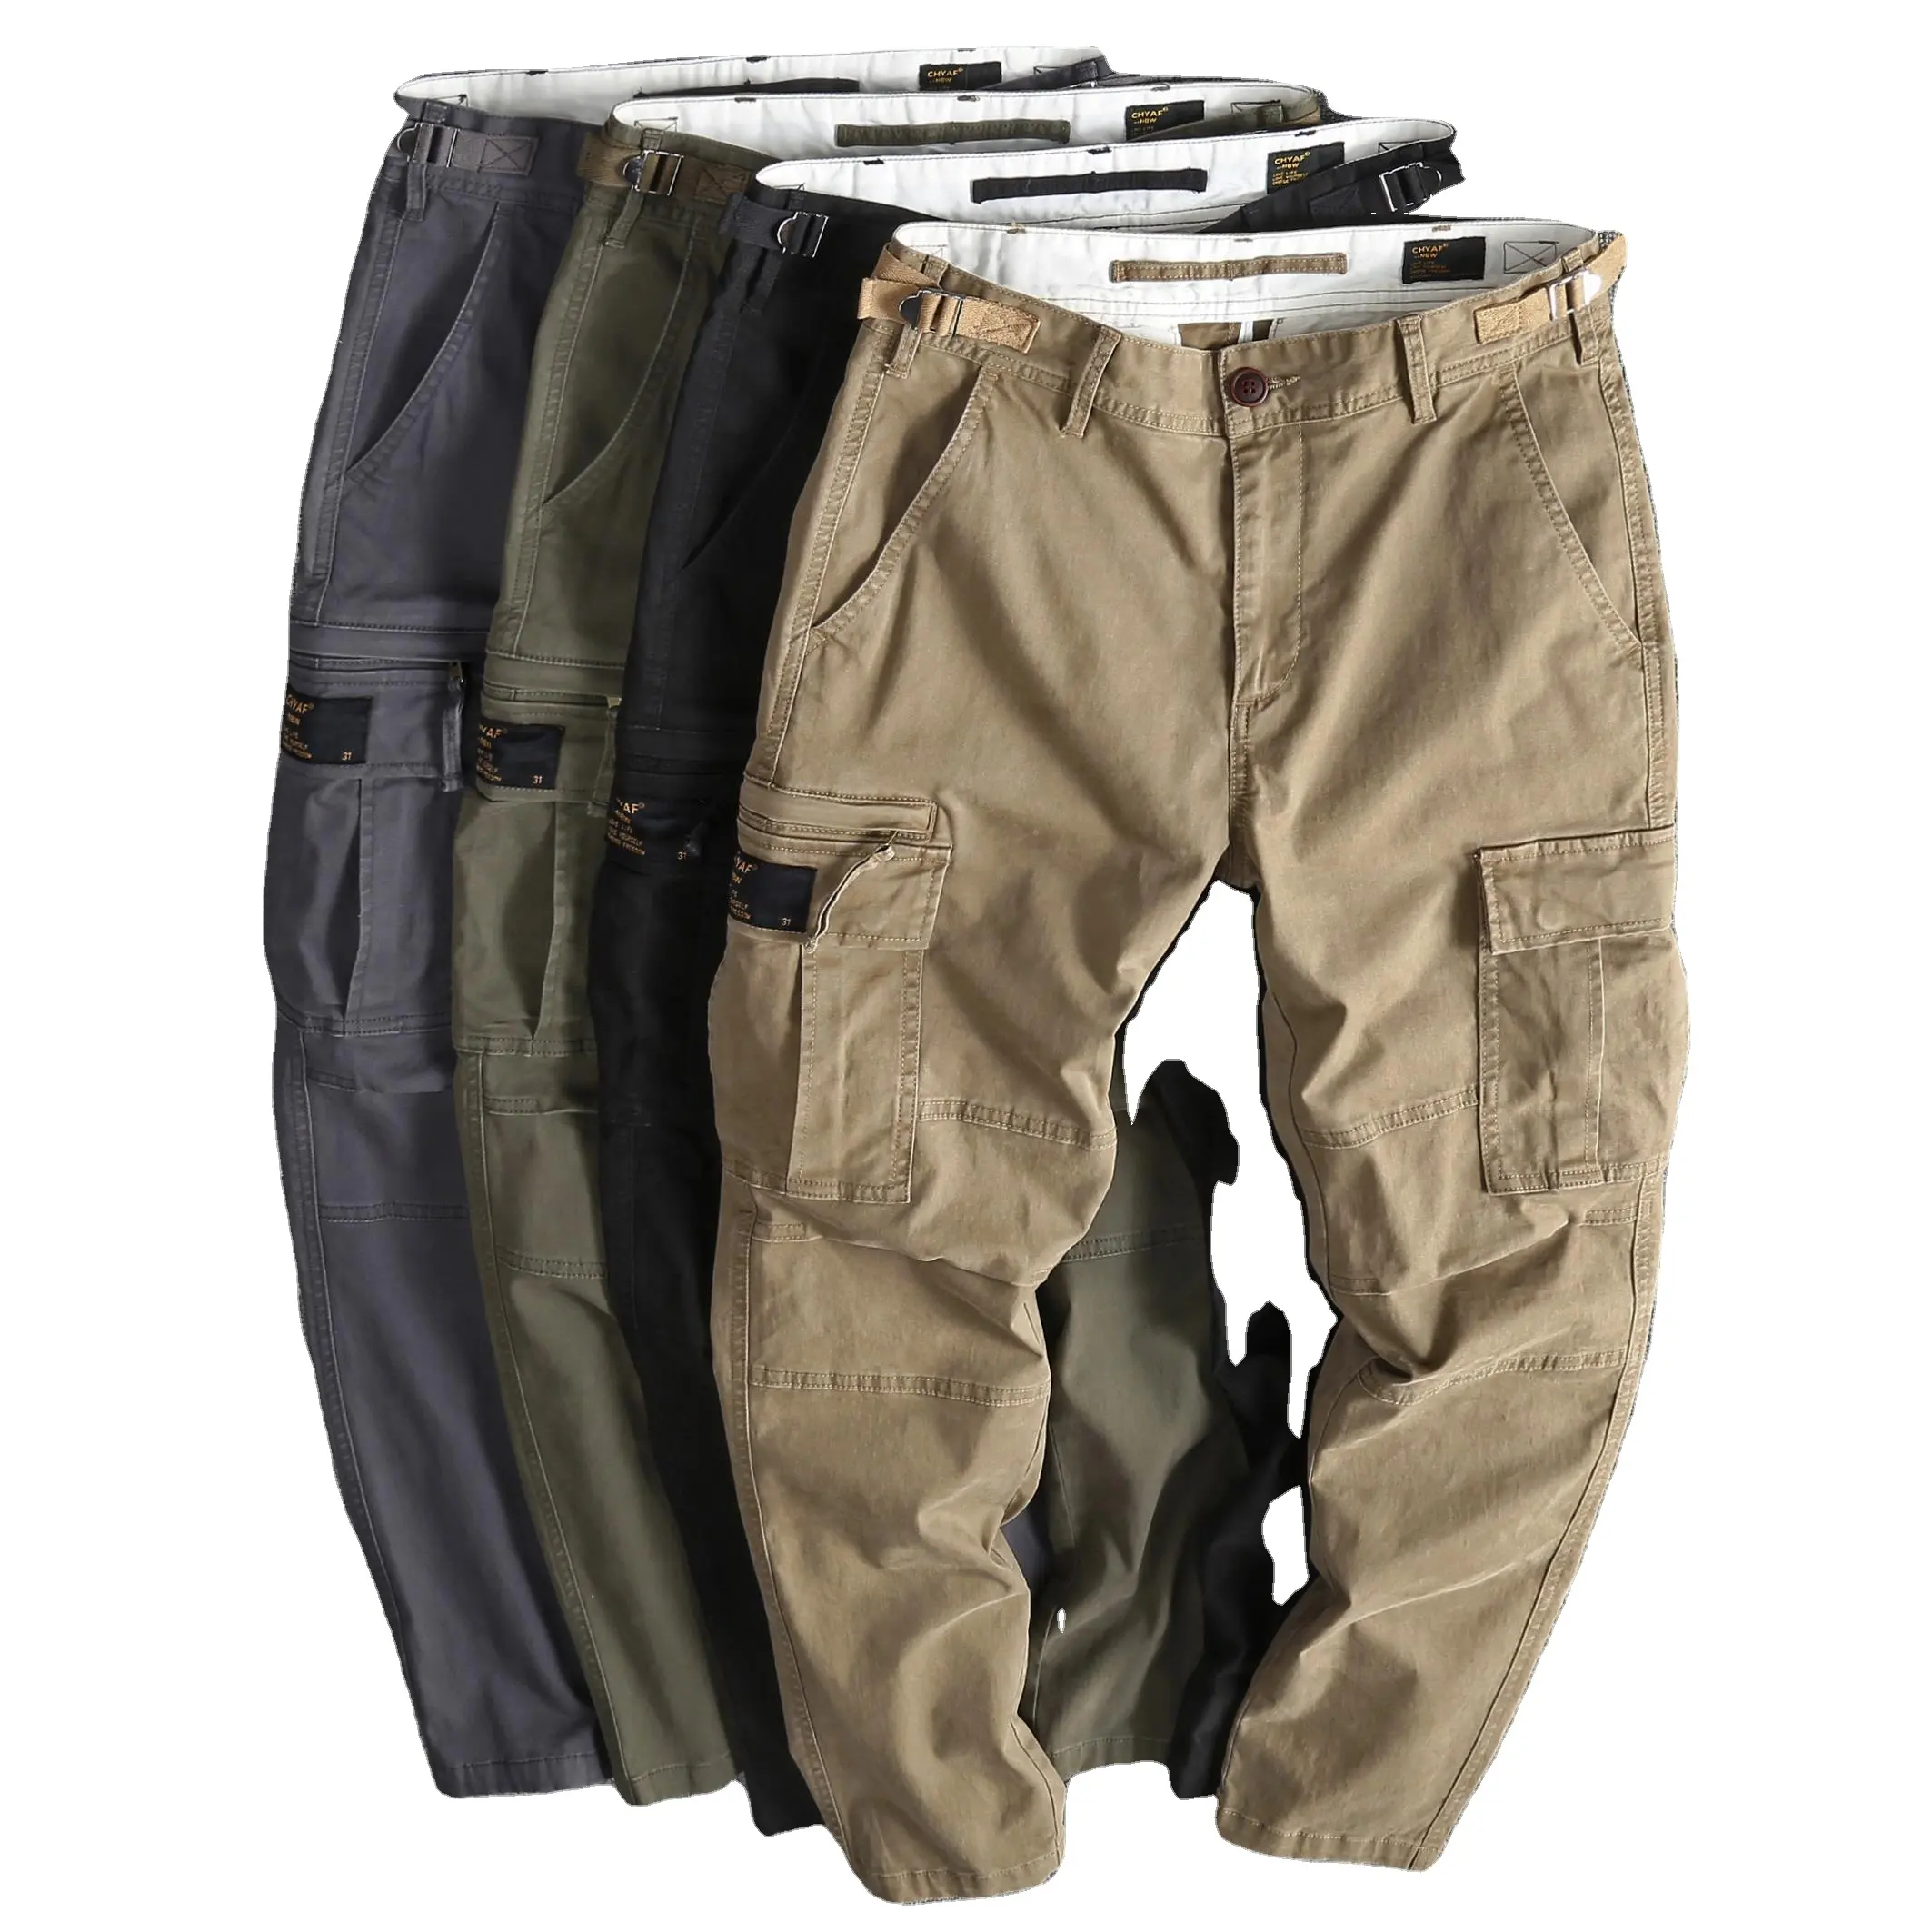 Free sample New Fashion Men Multi-pocket Hip Hop Pants Trousers Streetwear Sweatpants Male Casual Cargo Joggers Pants Men